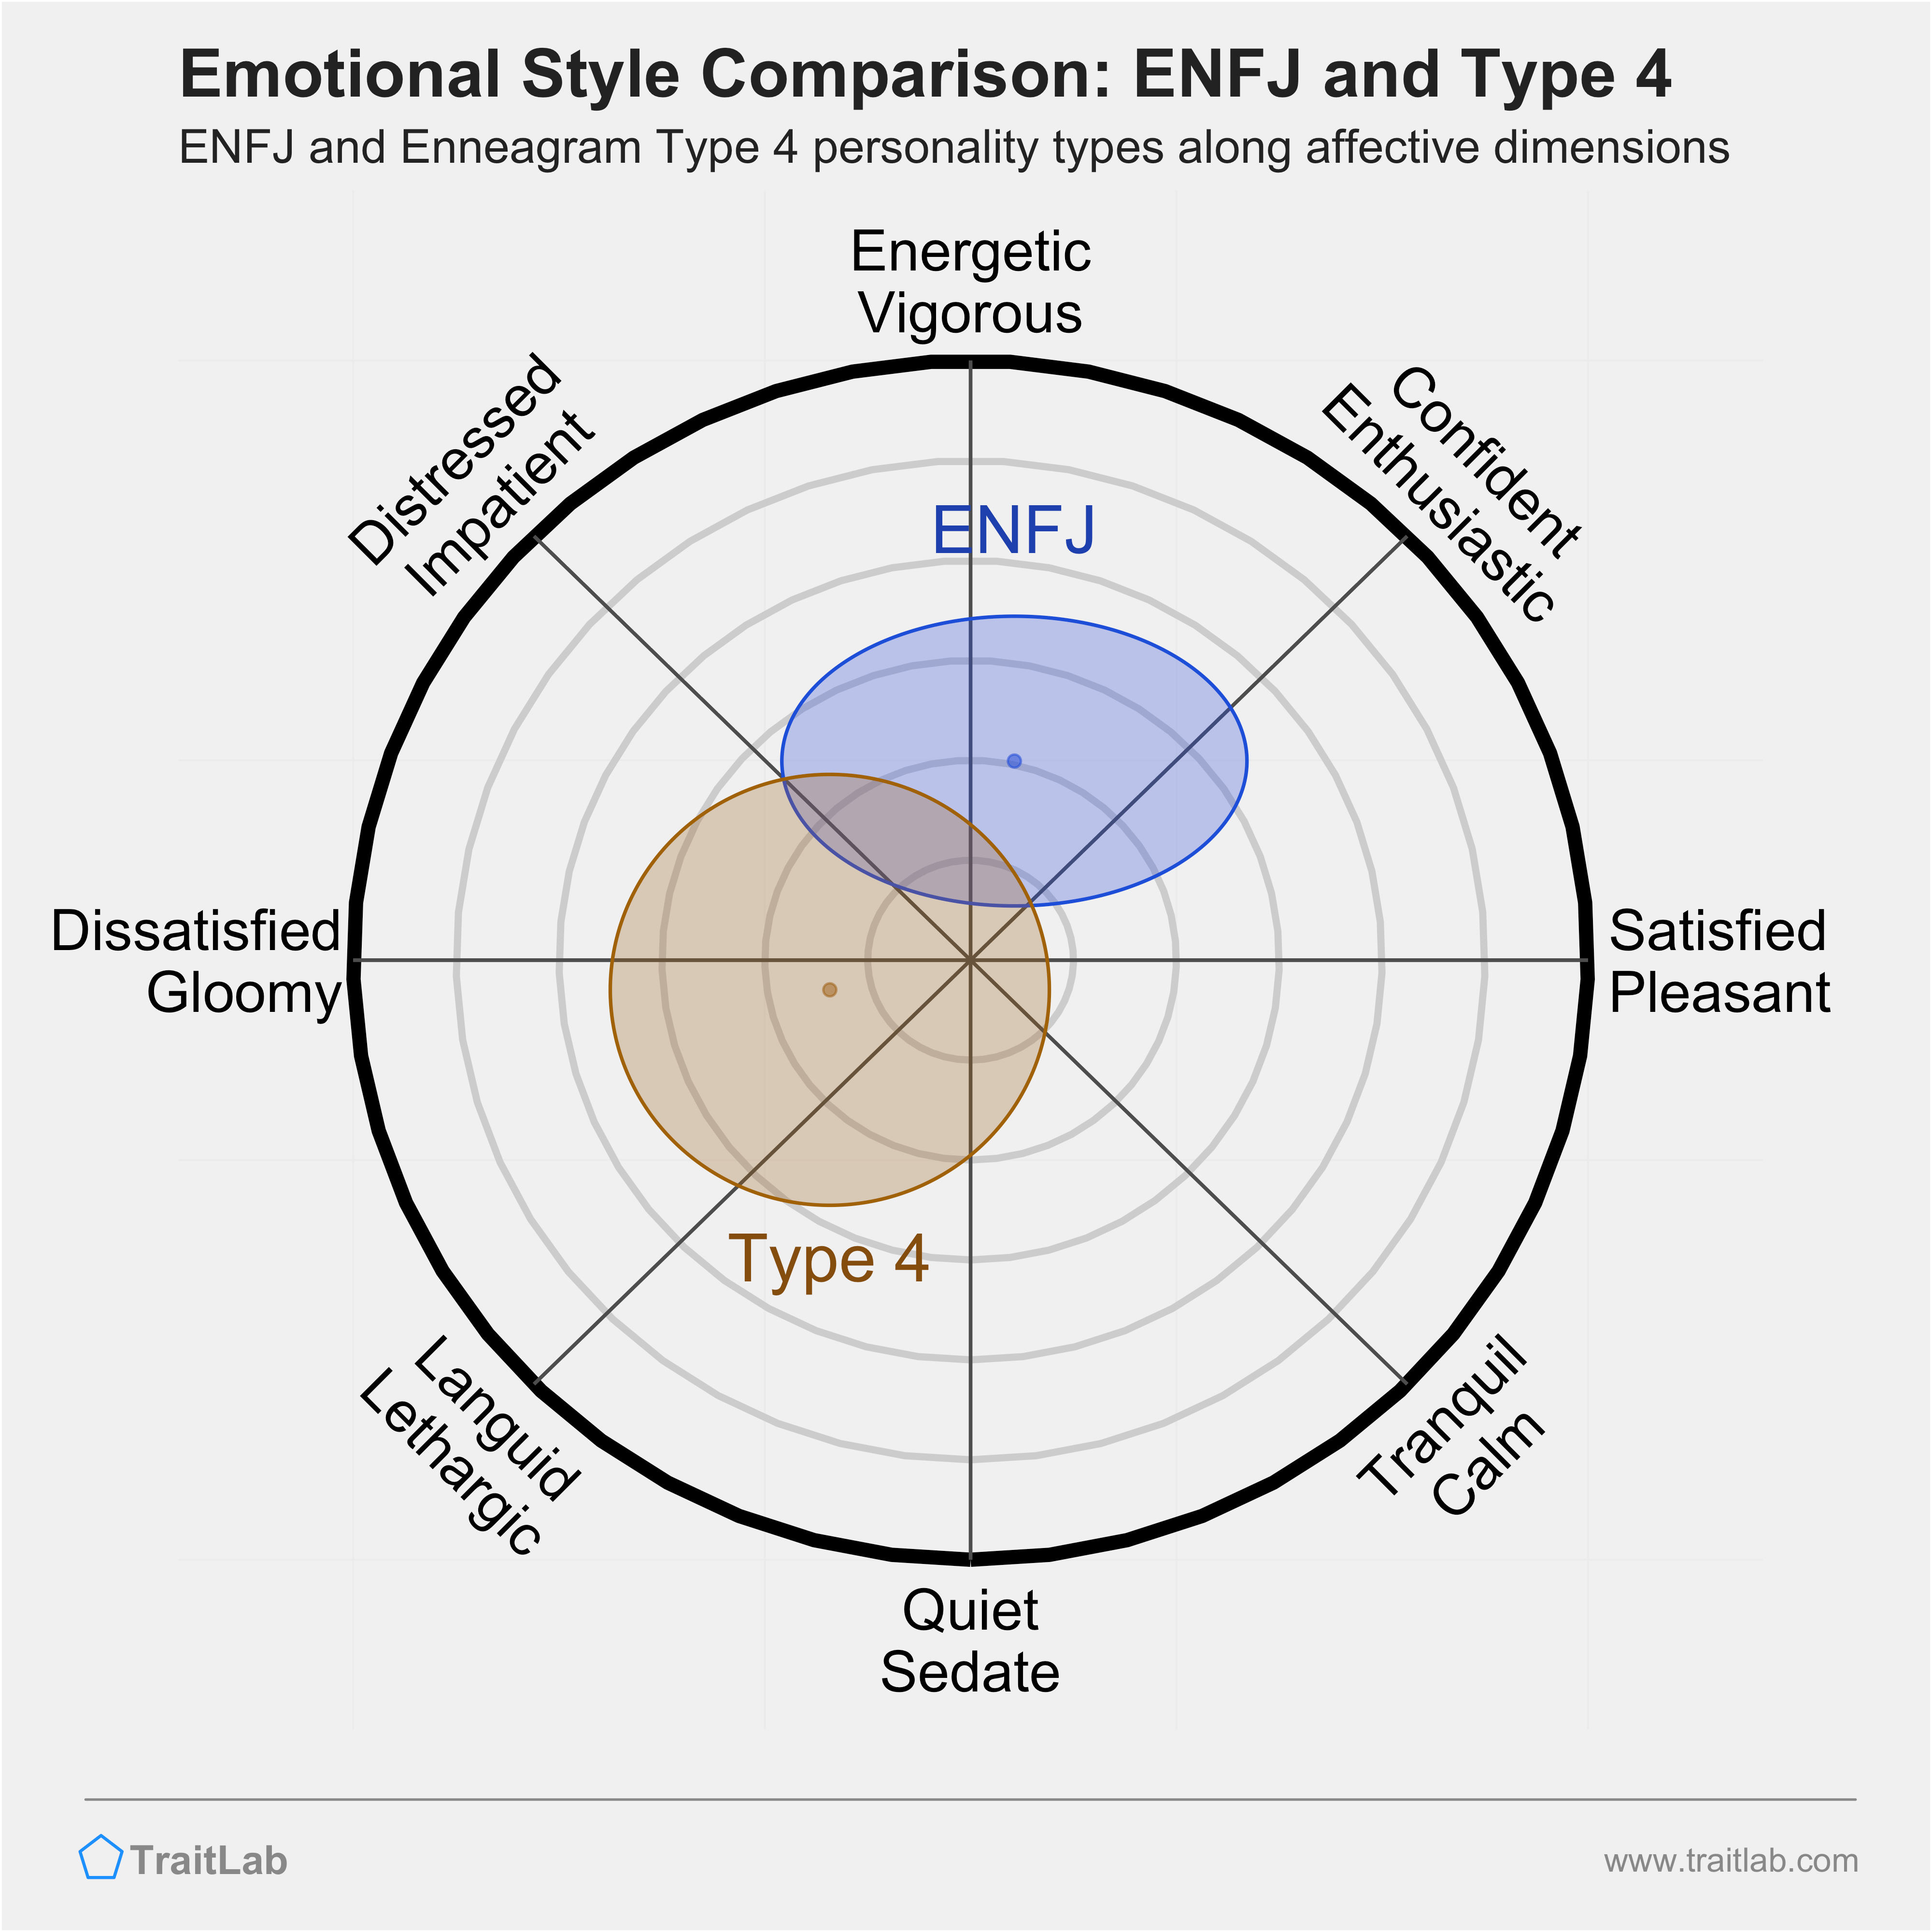 ENFJ and Type 4 comparison across emotional (affective) dimensions